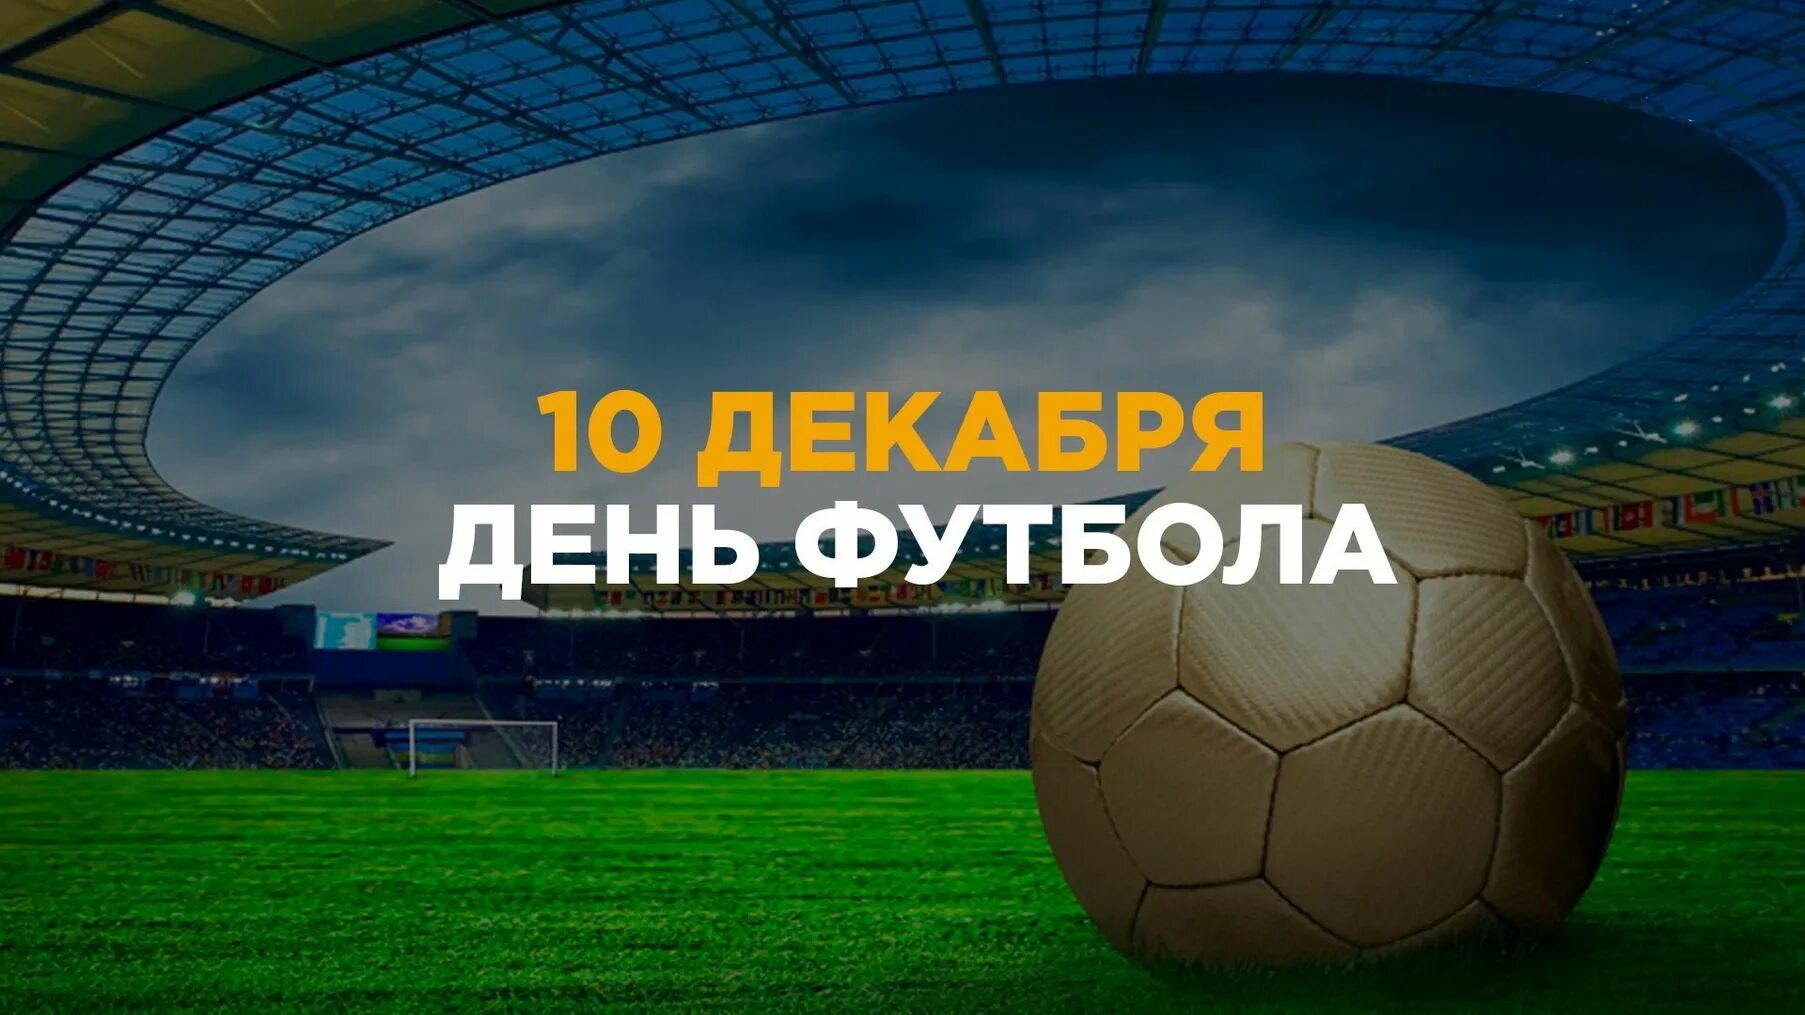 День футбола. Международный день футбола. Всемирный день футбола открытки. Всероссийский день футбола.